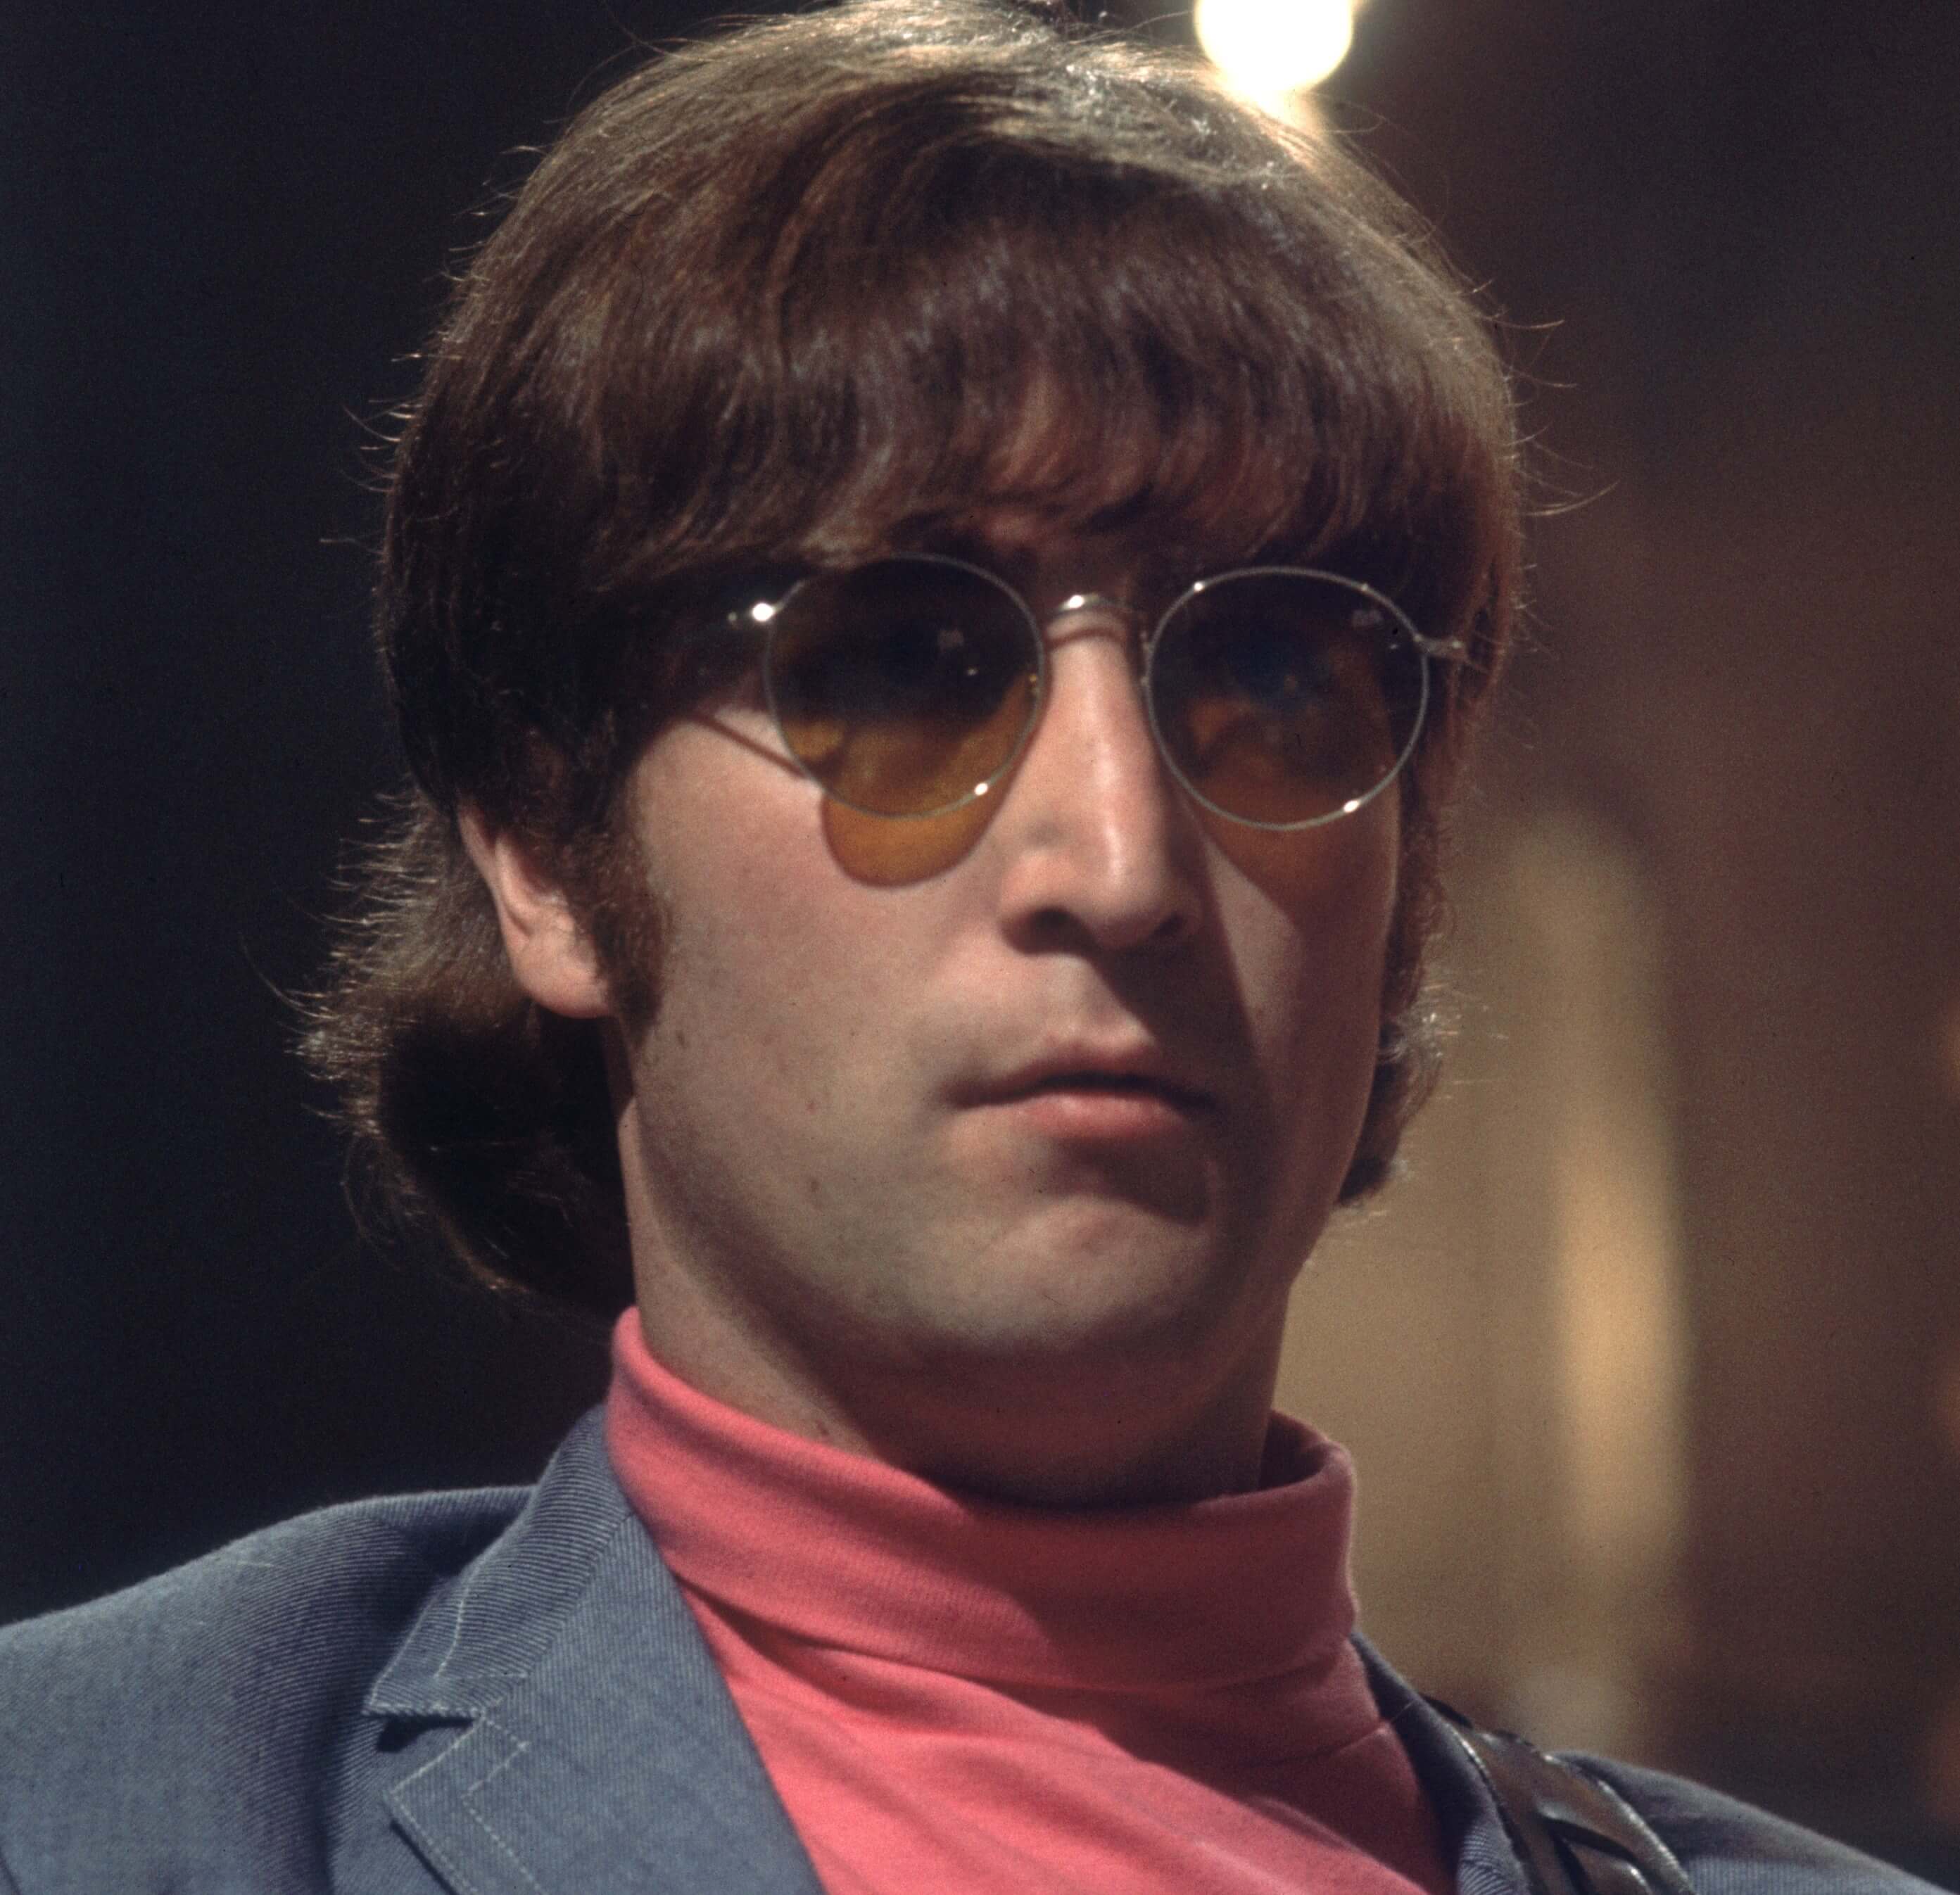 John Lennon wearing glasses during his "Imagine" era